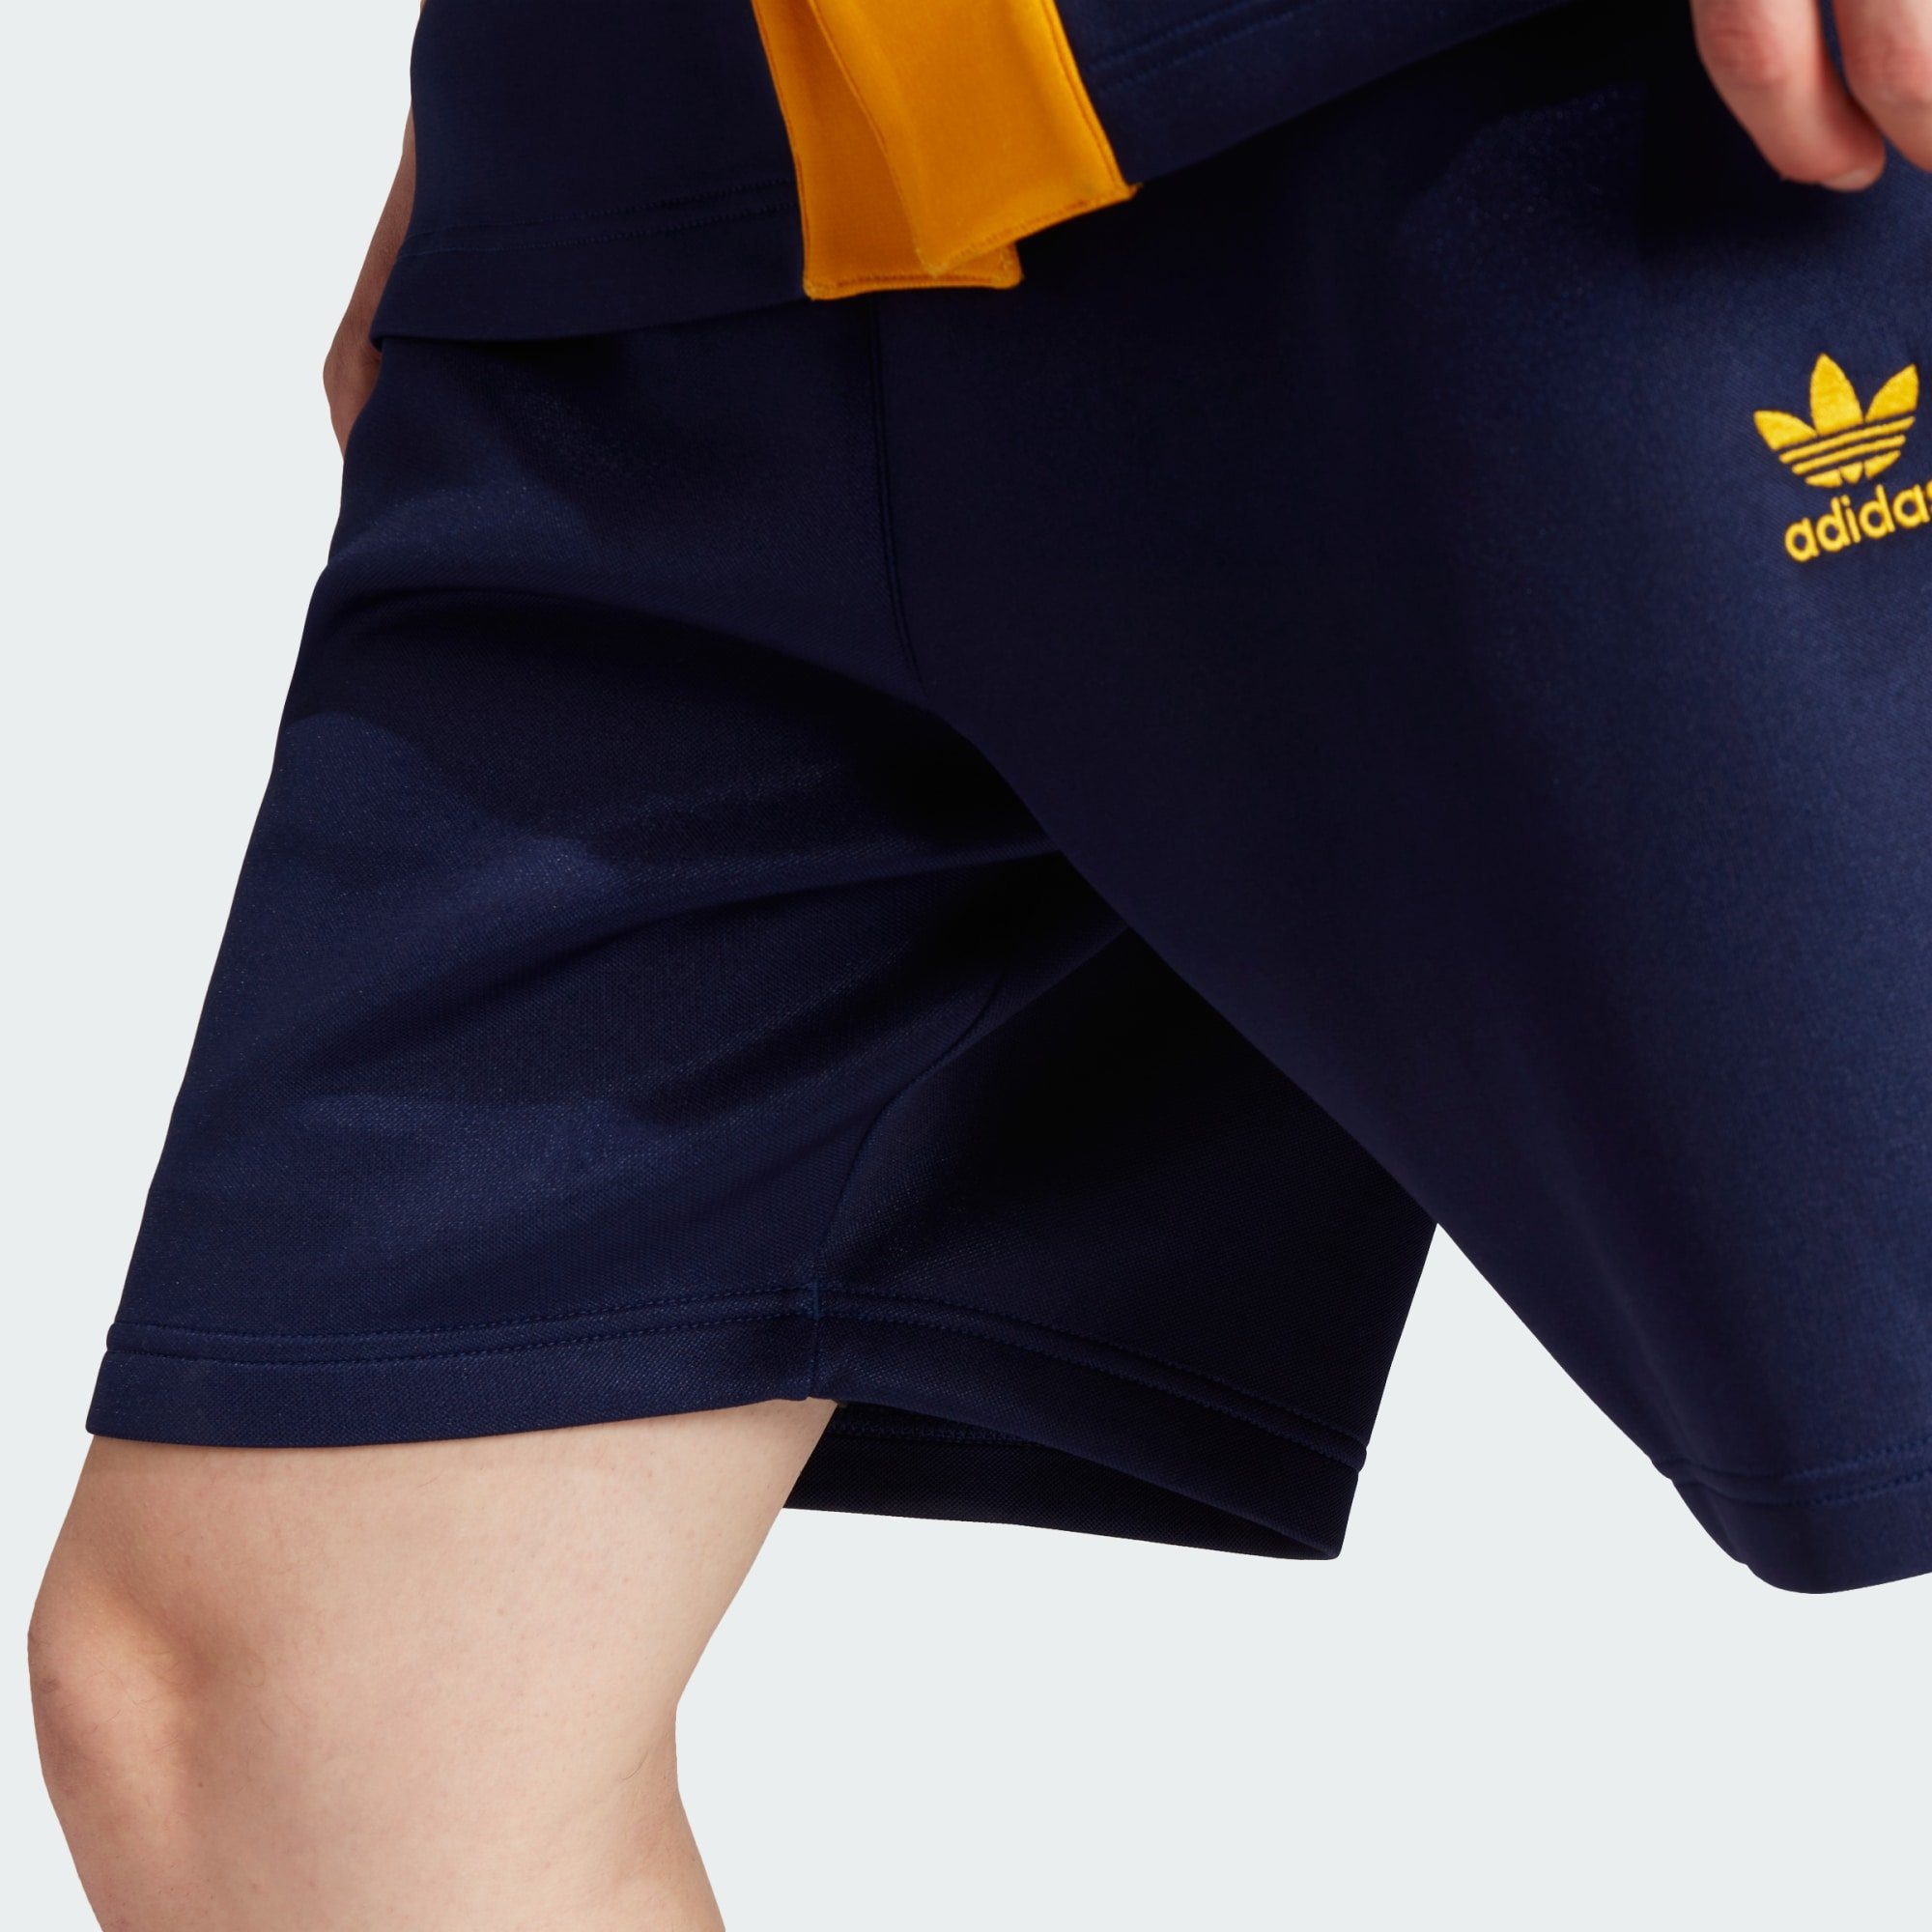 Crew Originals Shorts Yellow SHORTS ADICOLOR Dark adidas / Blue CLASSICS+